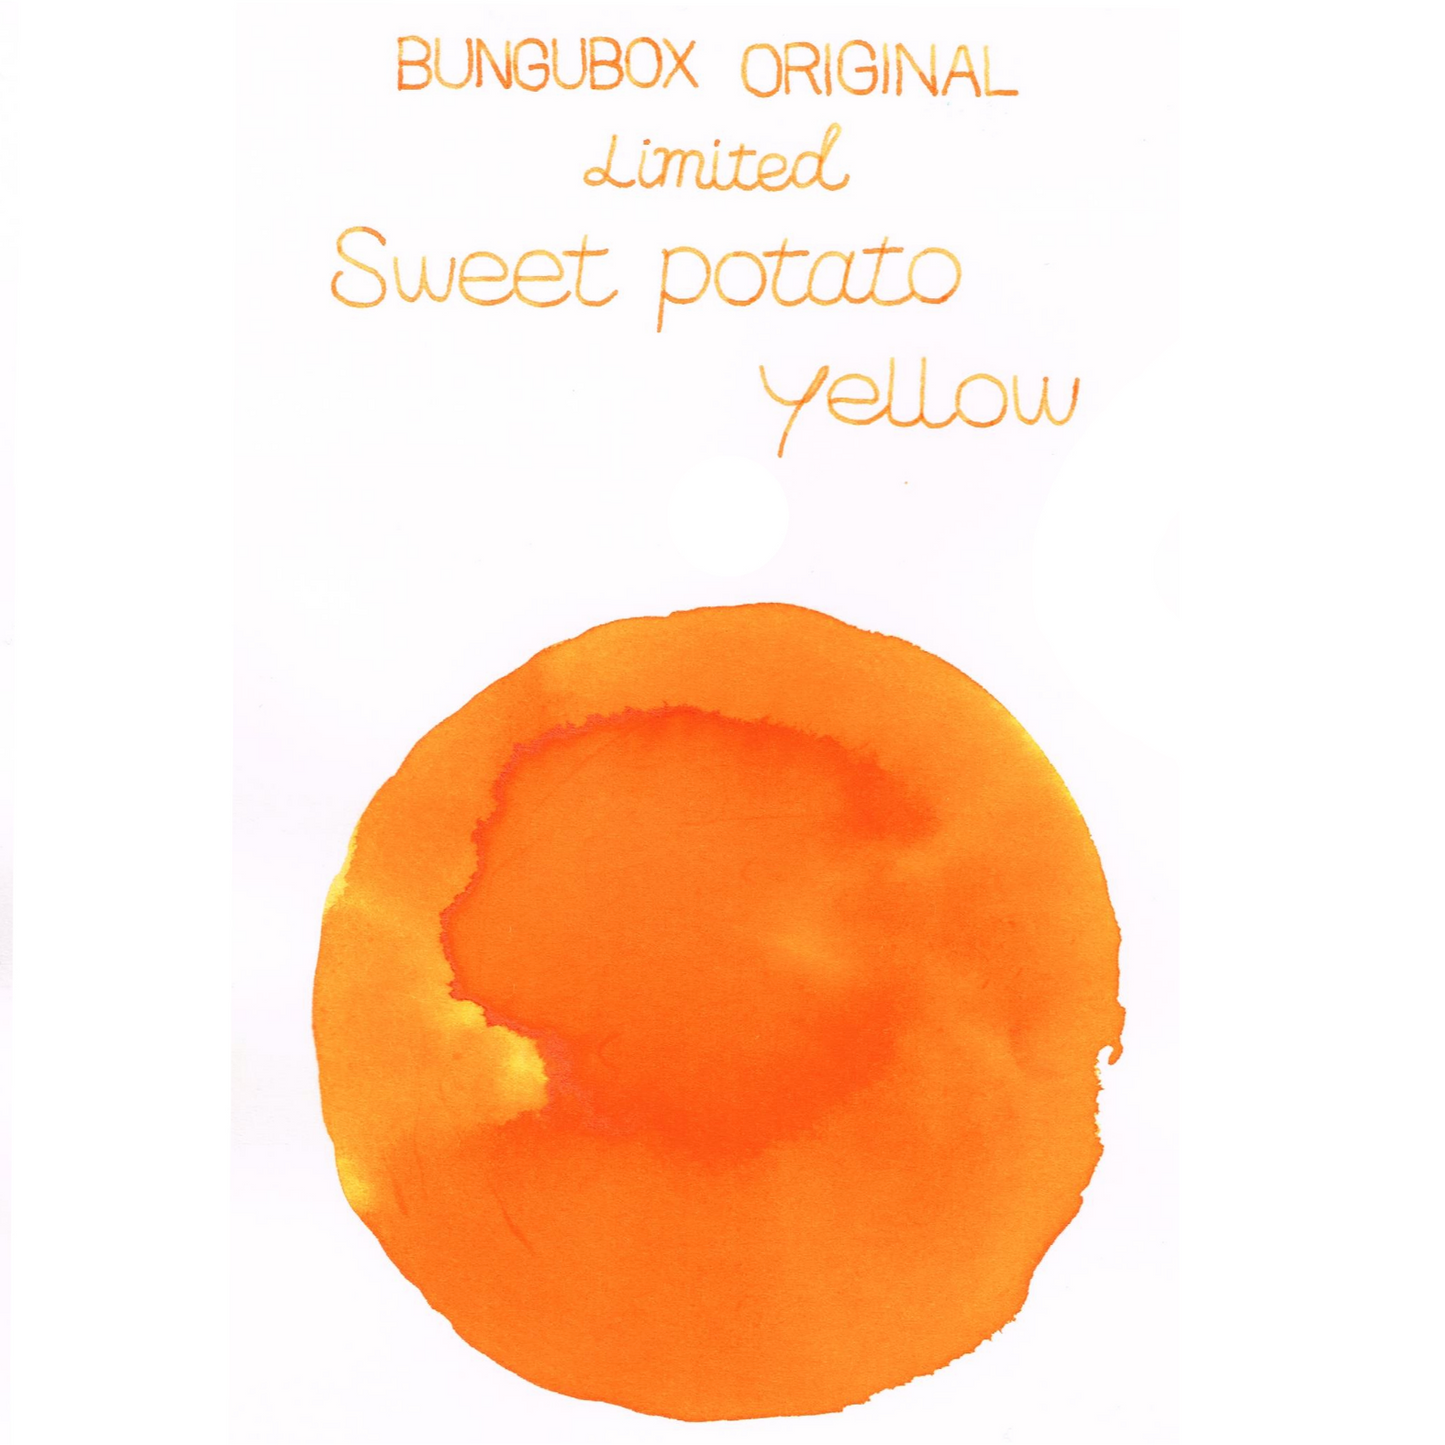 Ink tells more "Sweet Potato Yellow"